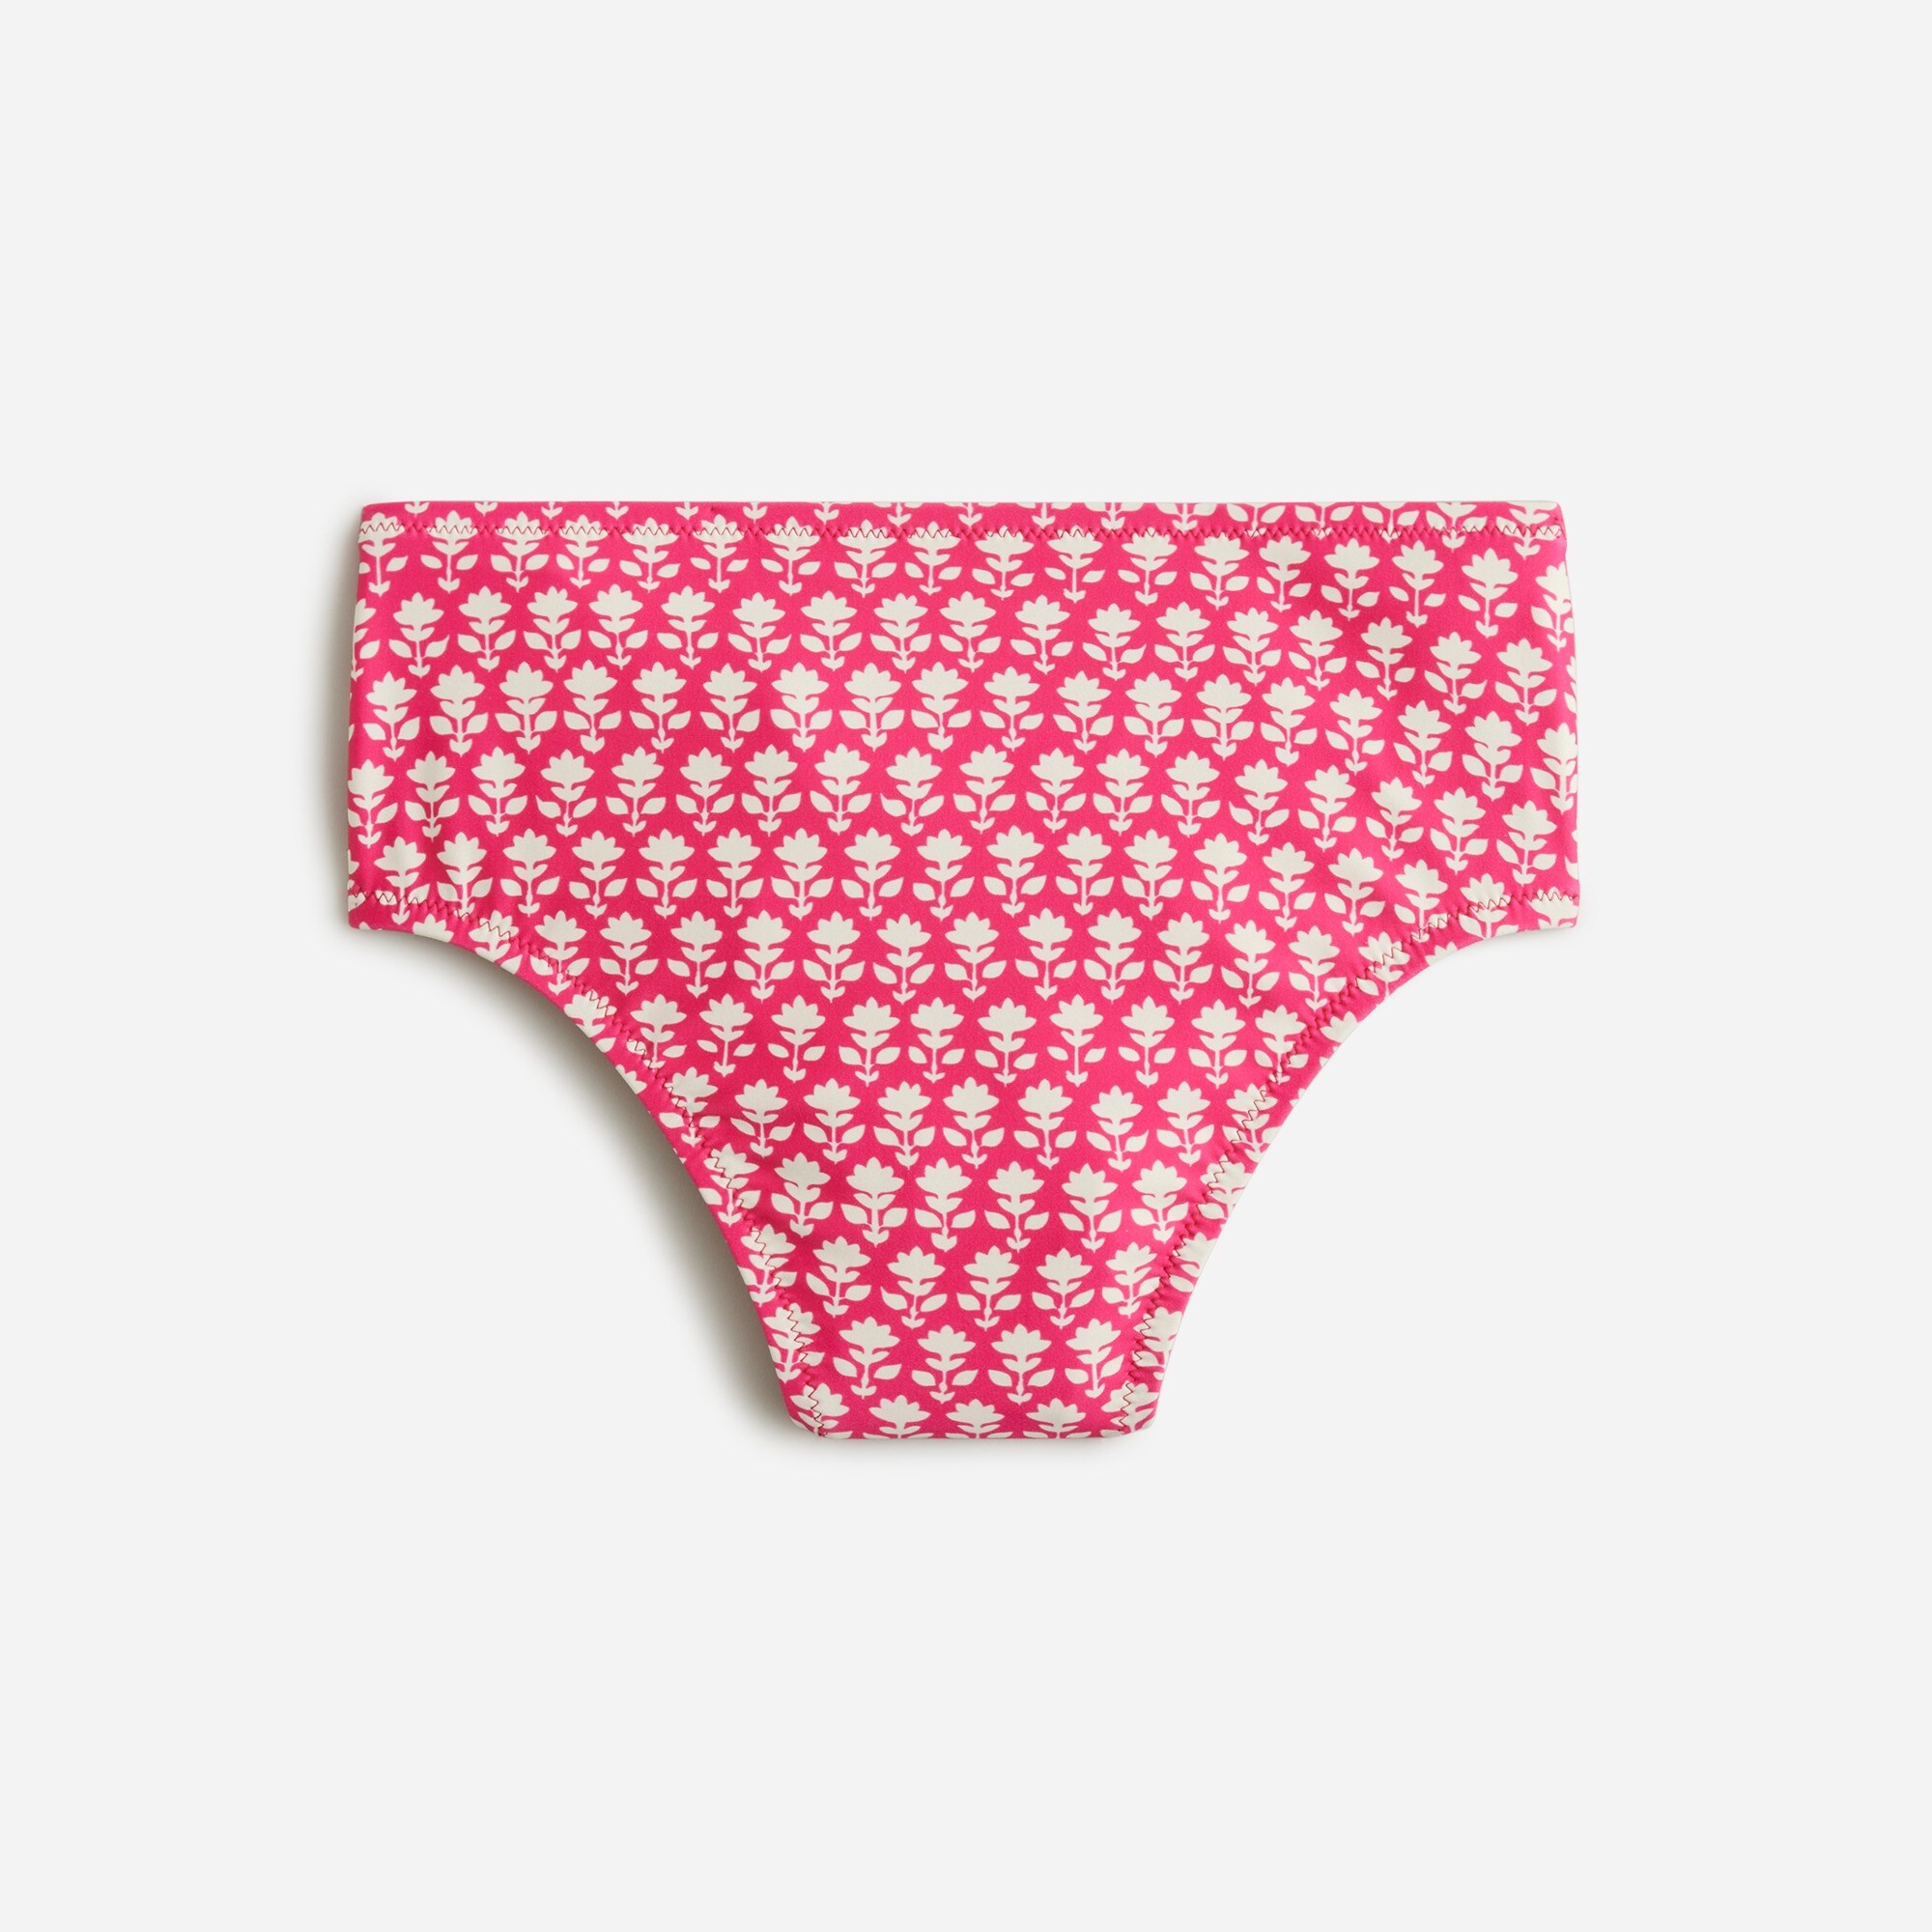  High-rise full-coverage bikini bottom in pink stamp floral